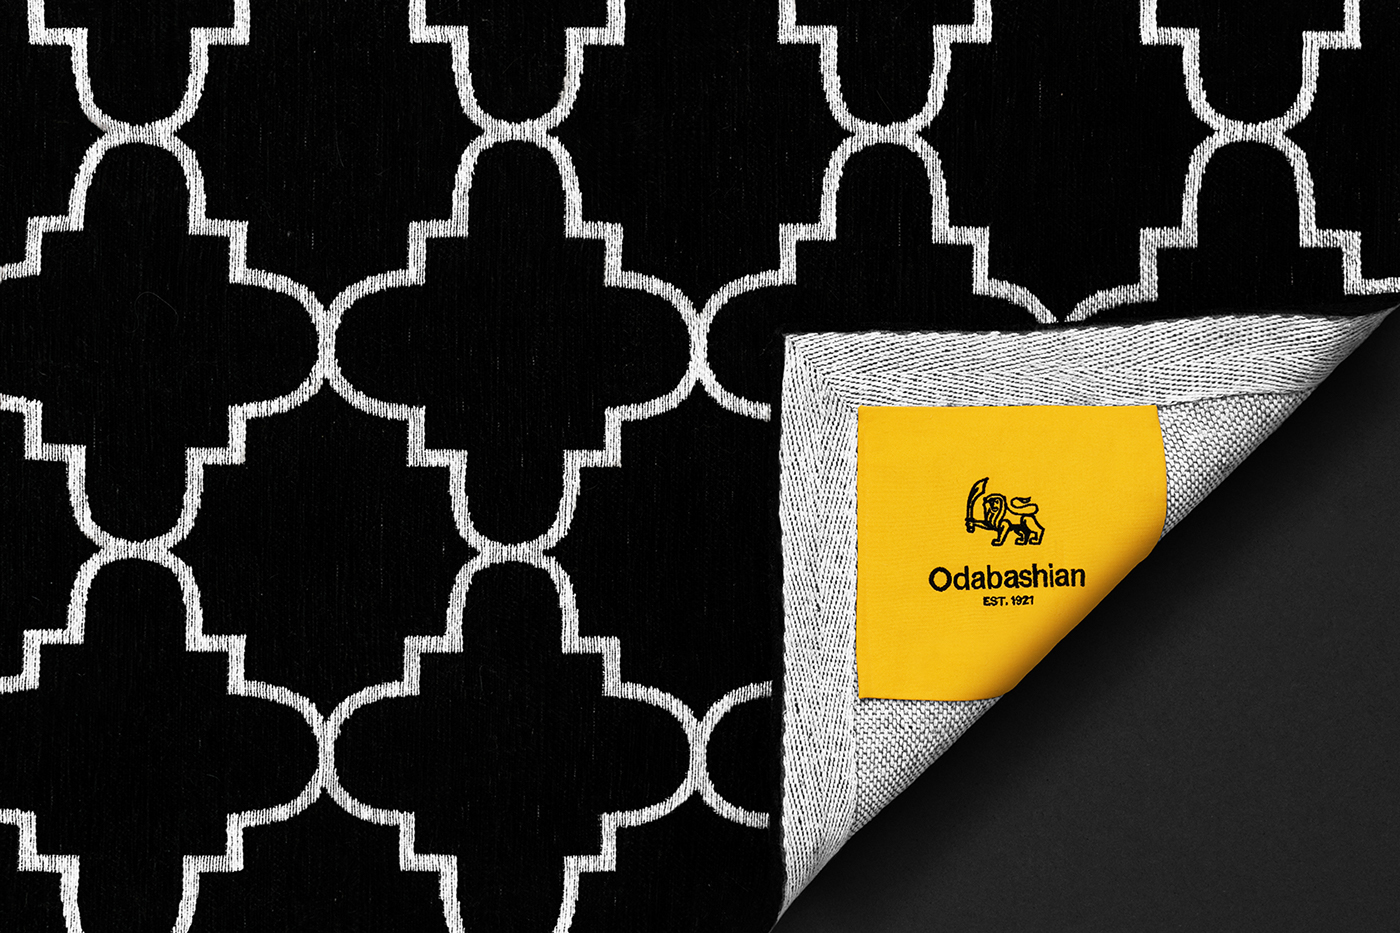 Odabashian rugs bespoke Retail handmade minimal Layout swiss grid yellow black gold foil Rebrand